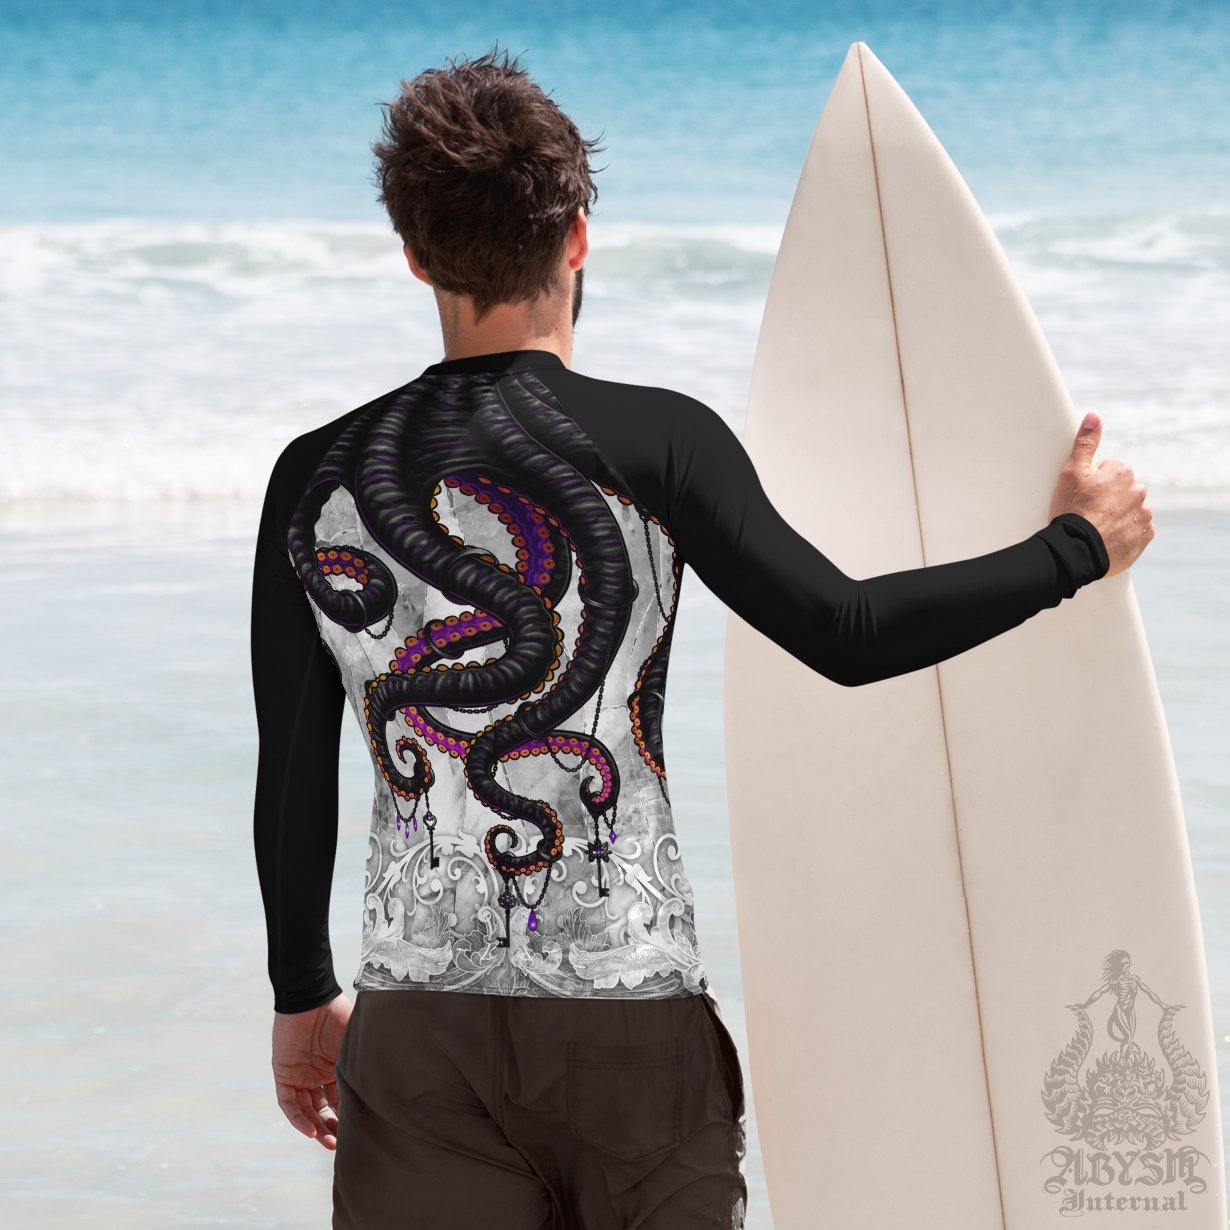 Octopus Rash Guard for Men, Long Sleeve spandex shirt for surfing